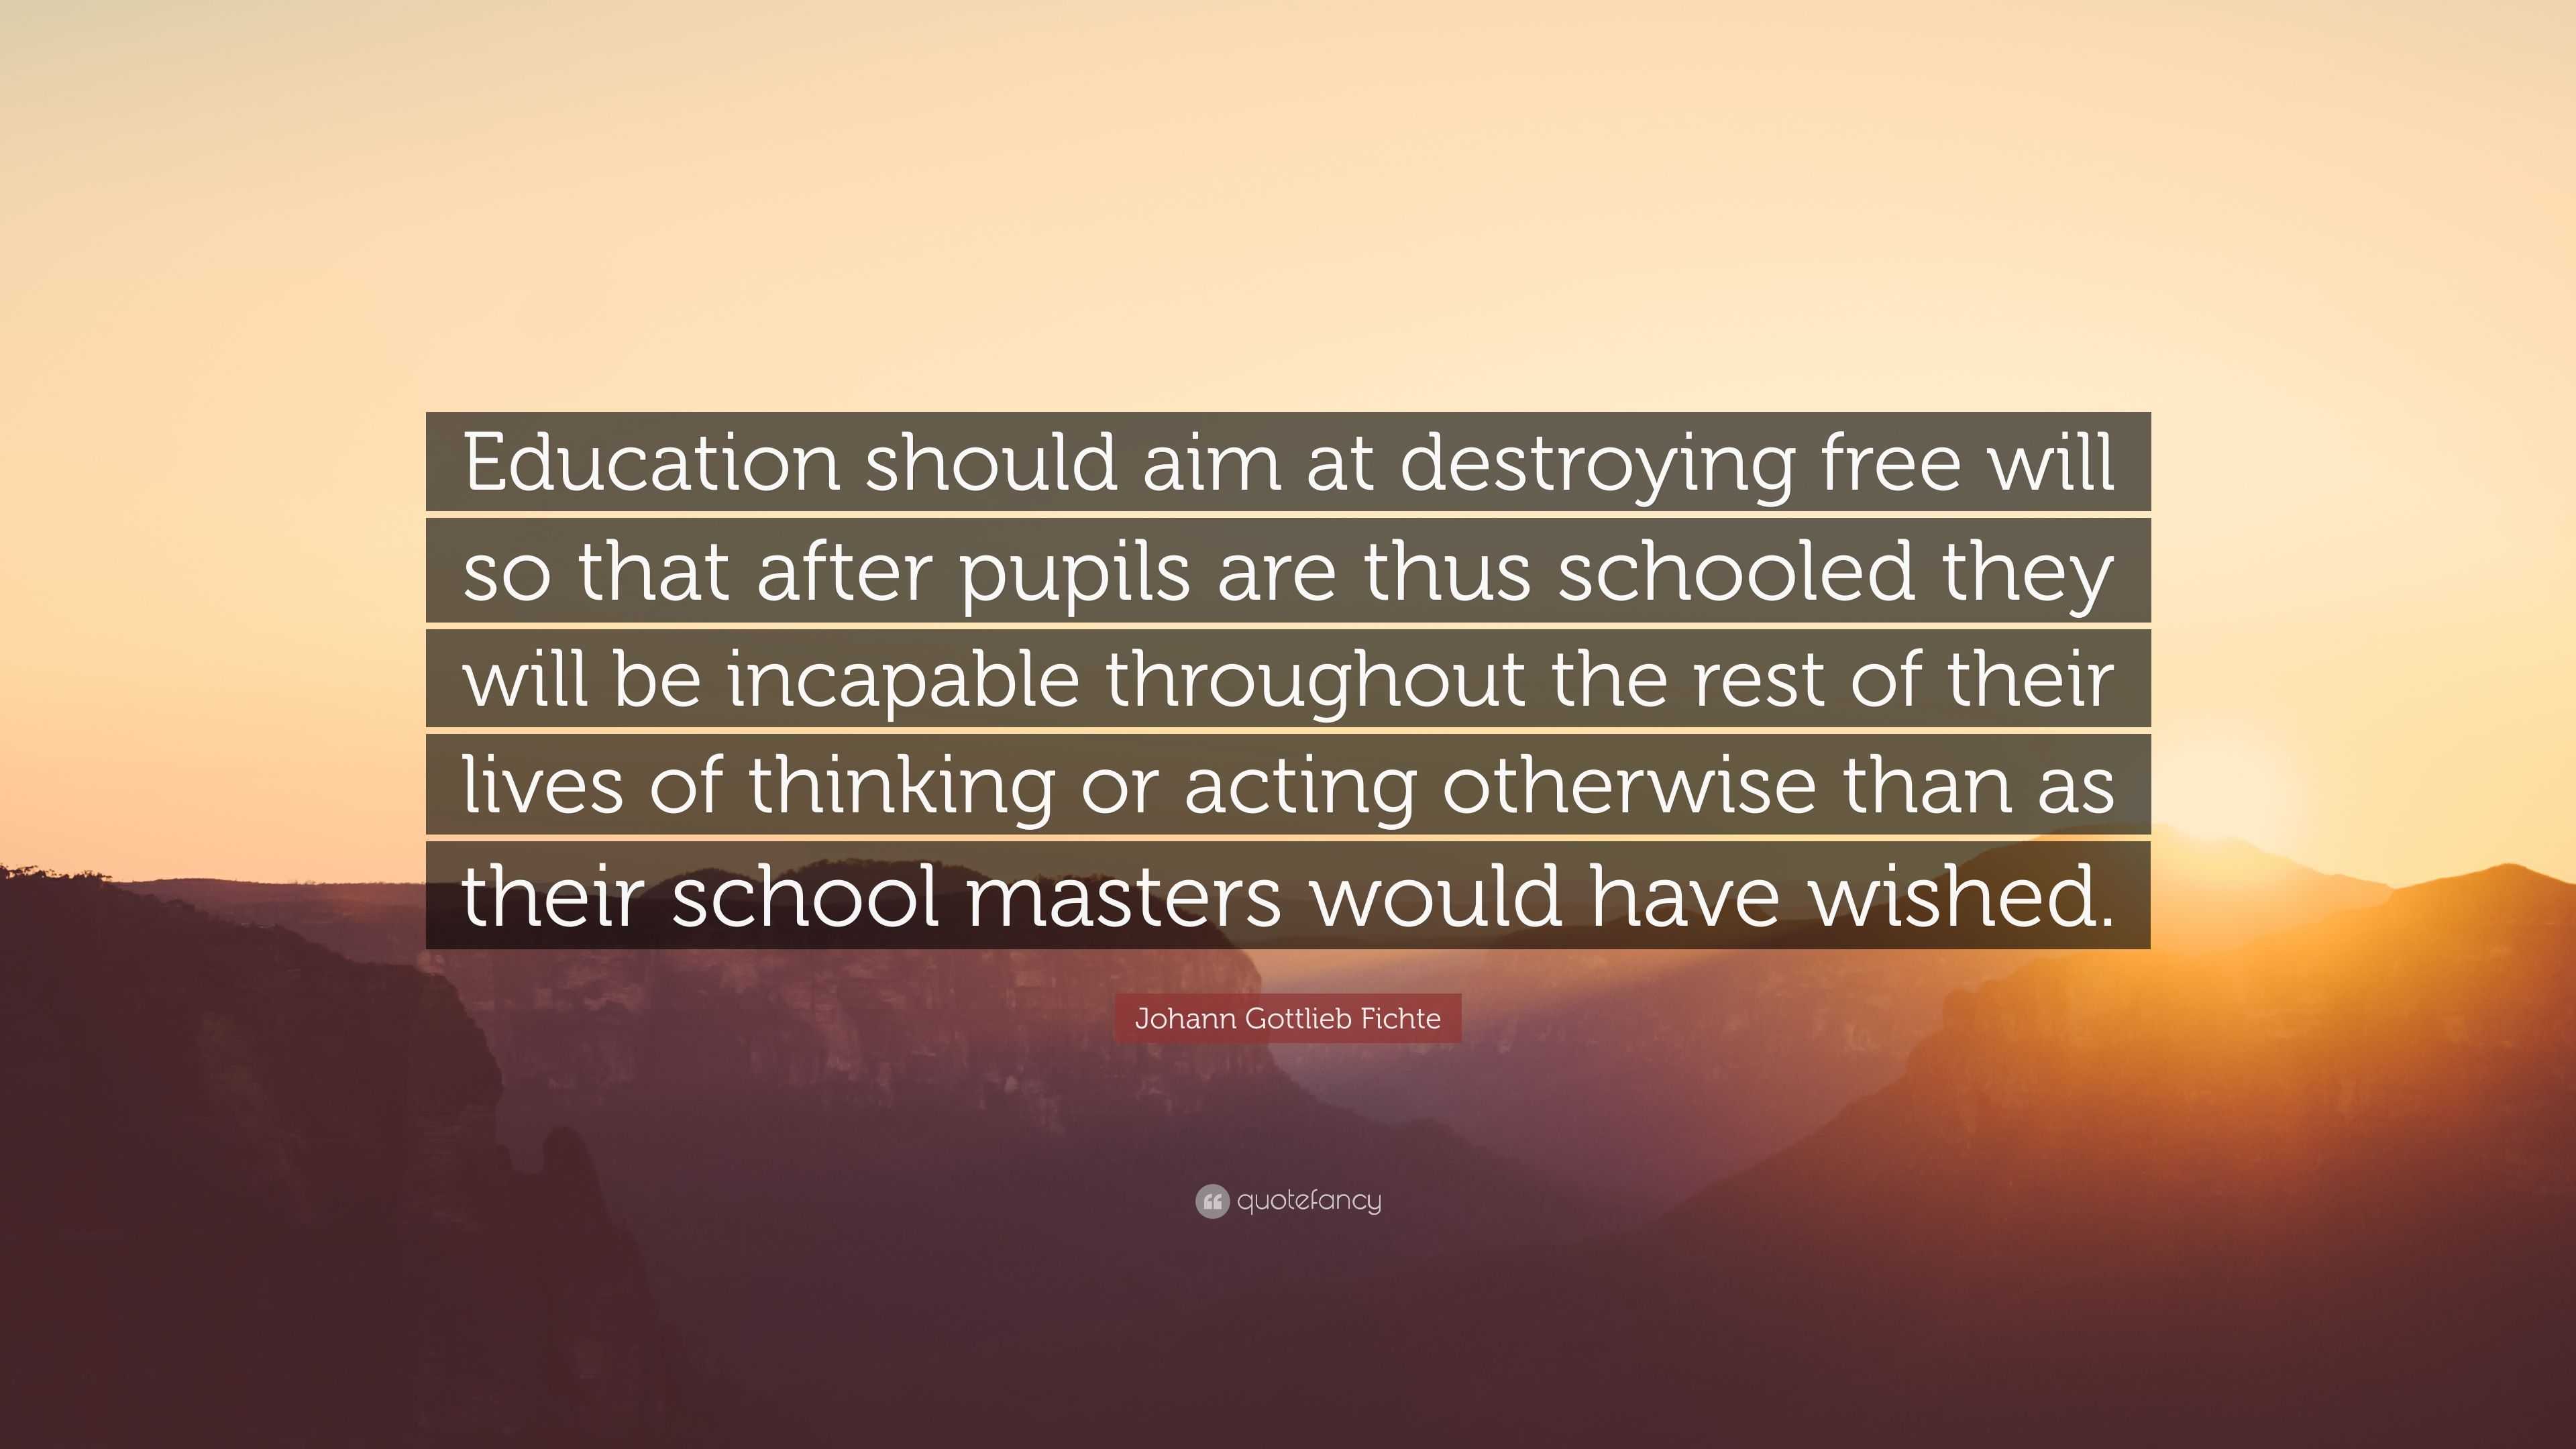 Johann Gottlieb Fichte Quote: “Education should aim at destroying free ...